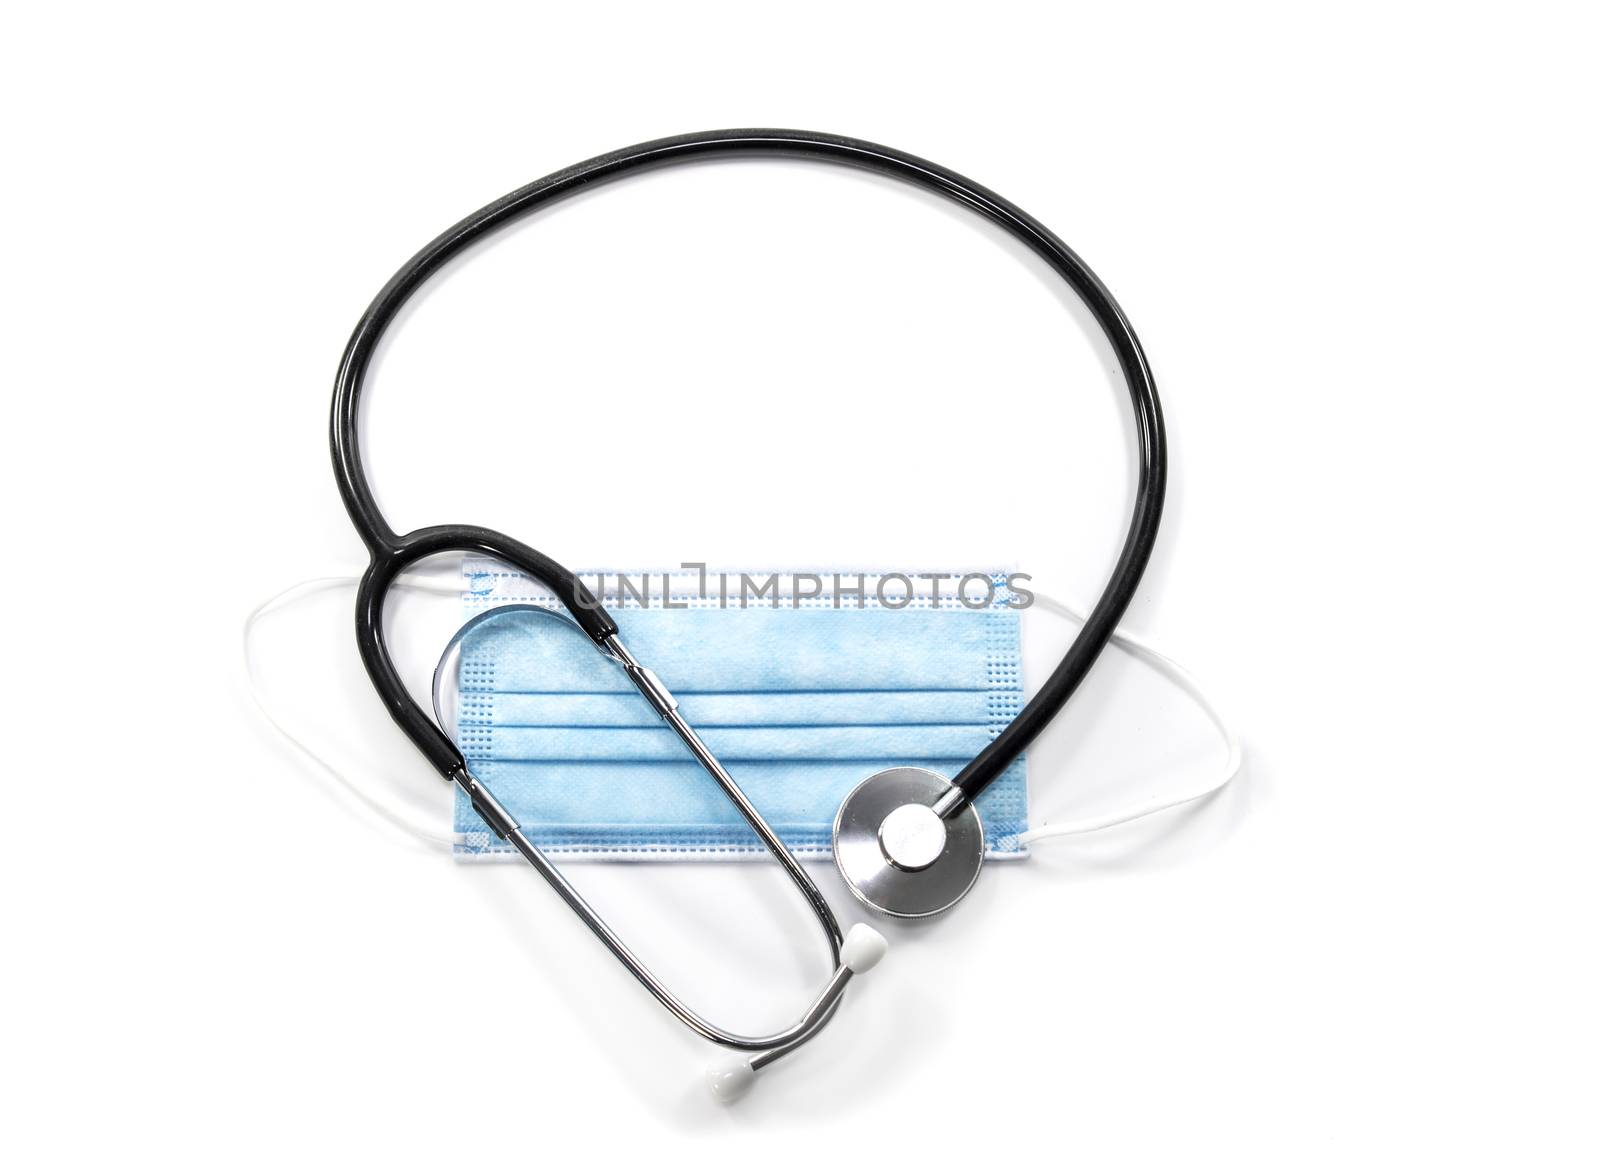 face mask with stethoscope isolated on white background